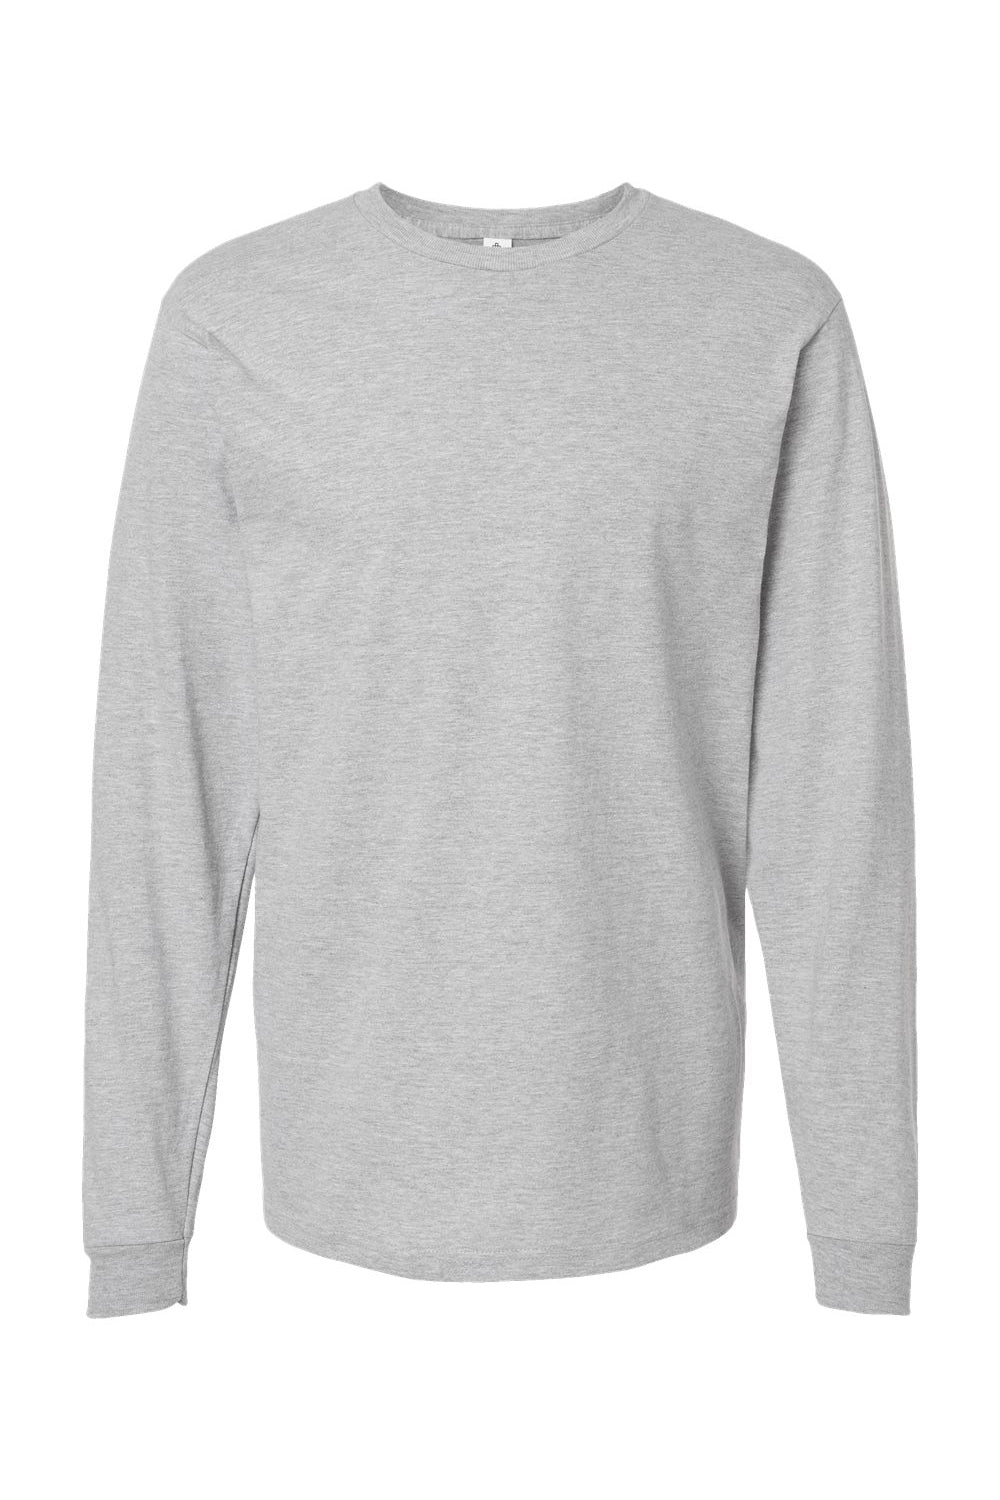 Tultex 291 Mens Jersey Long Sleeve Crewneck T-Shirt Heather Grey Flat Front